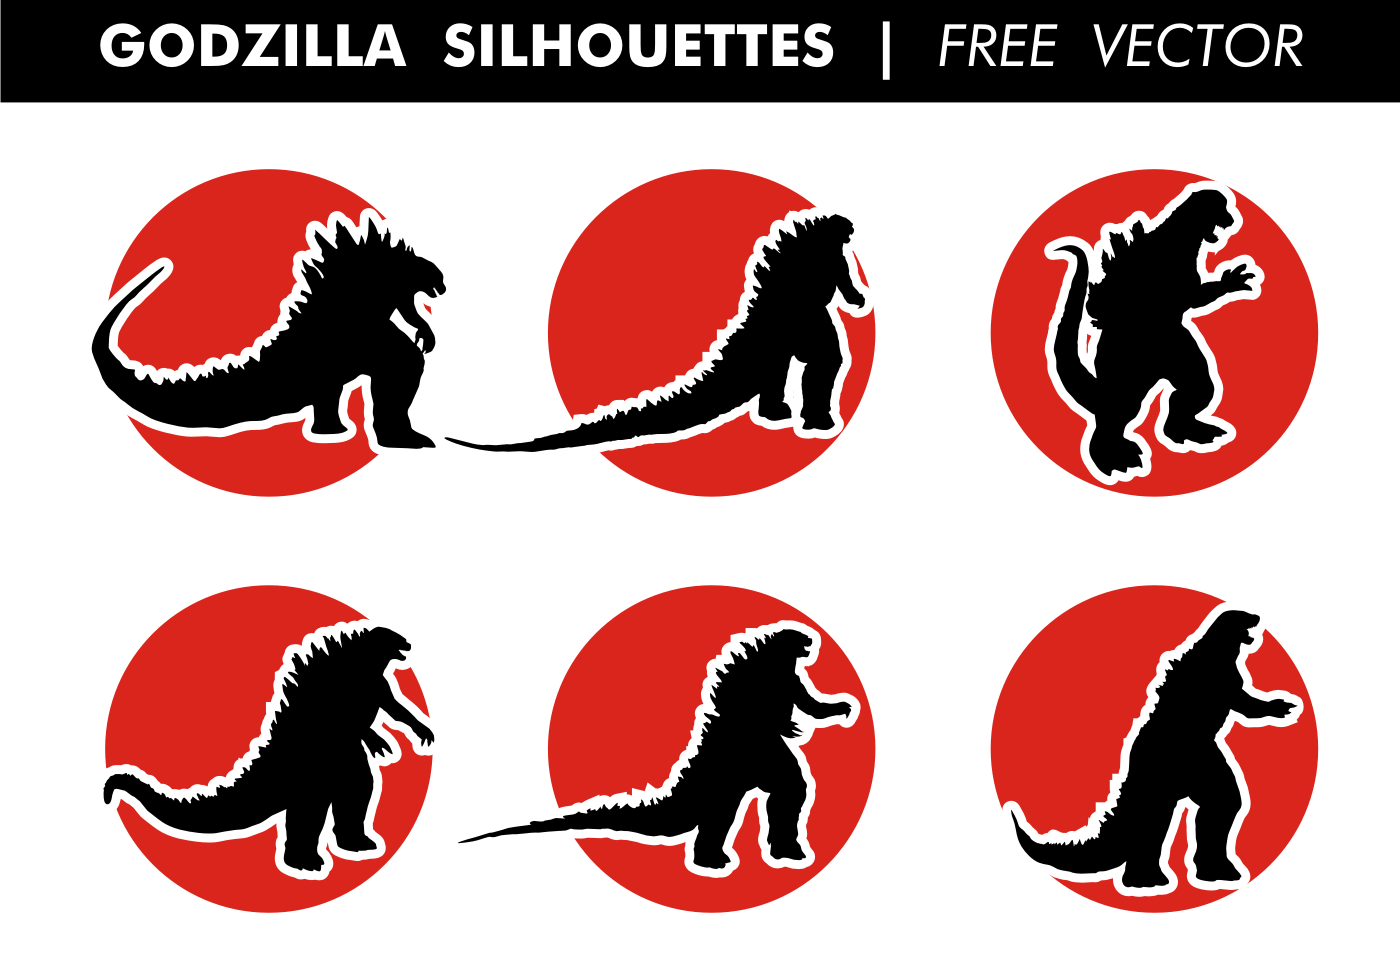 Godzilla Silhouettes Free Vector 121756 Vector Art at Vecteezy